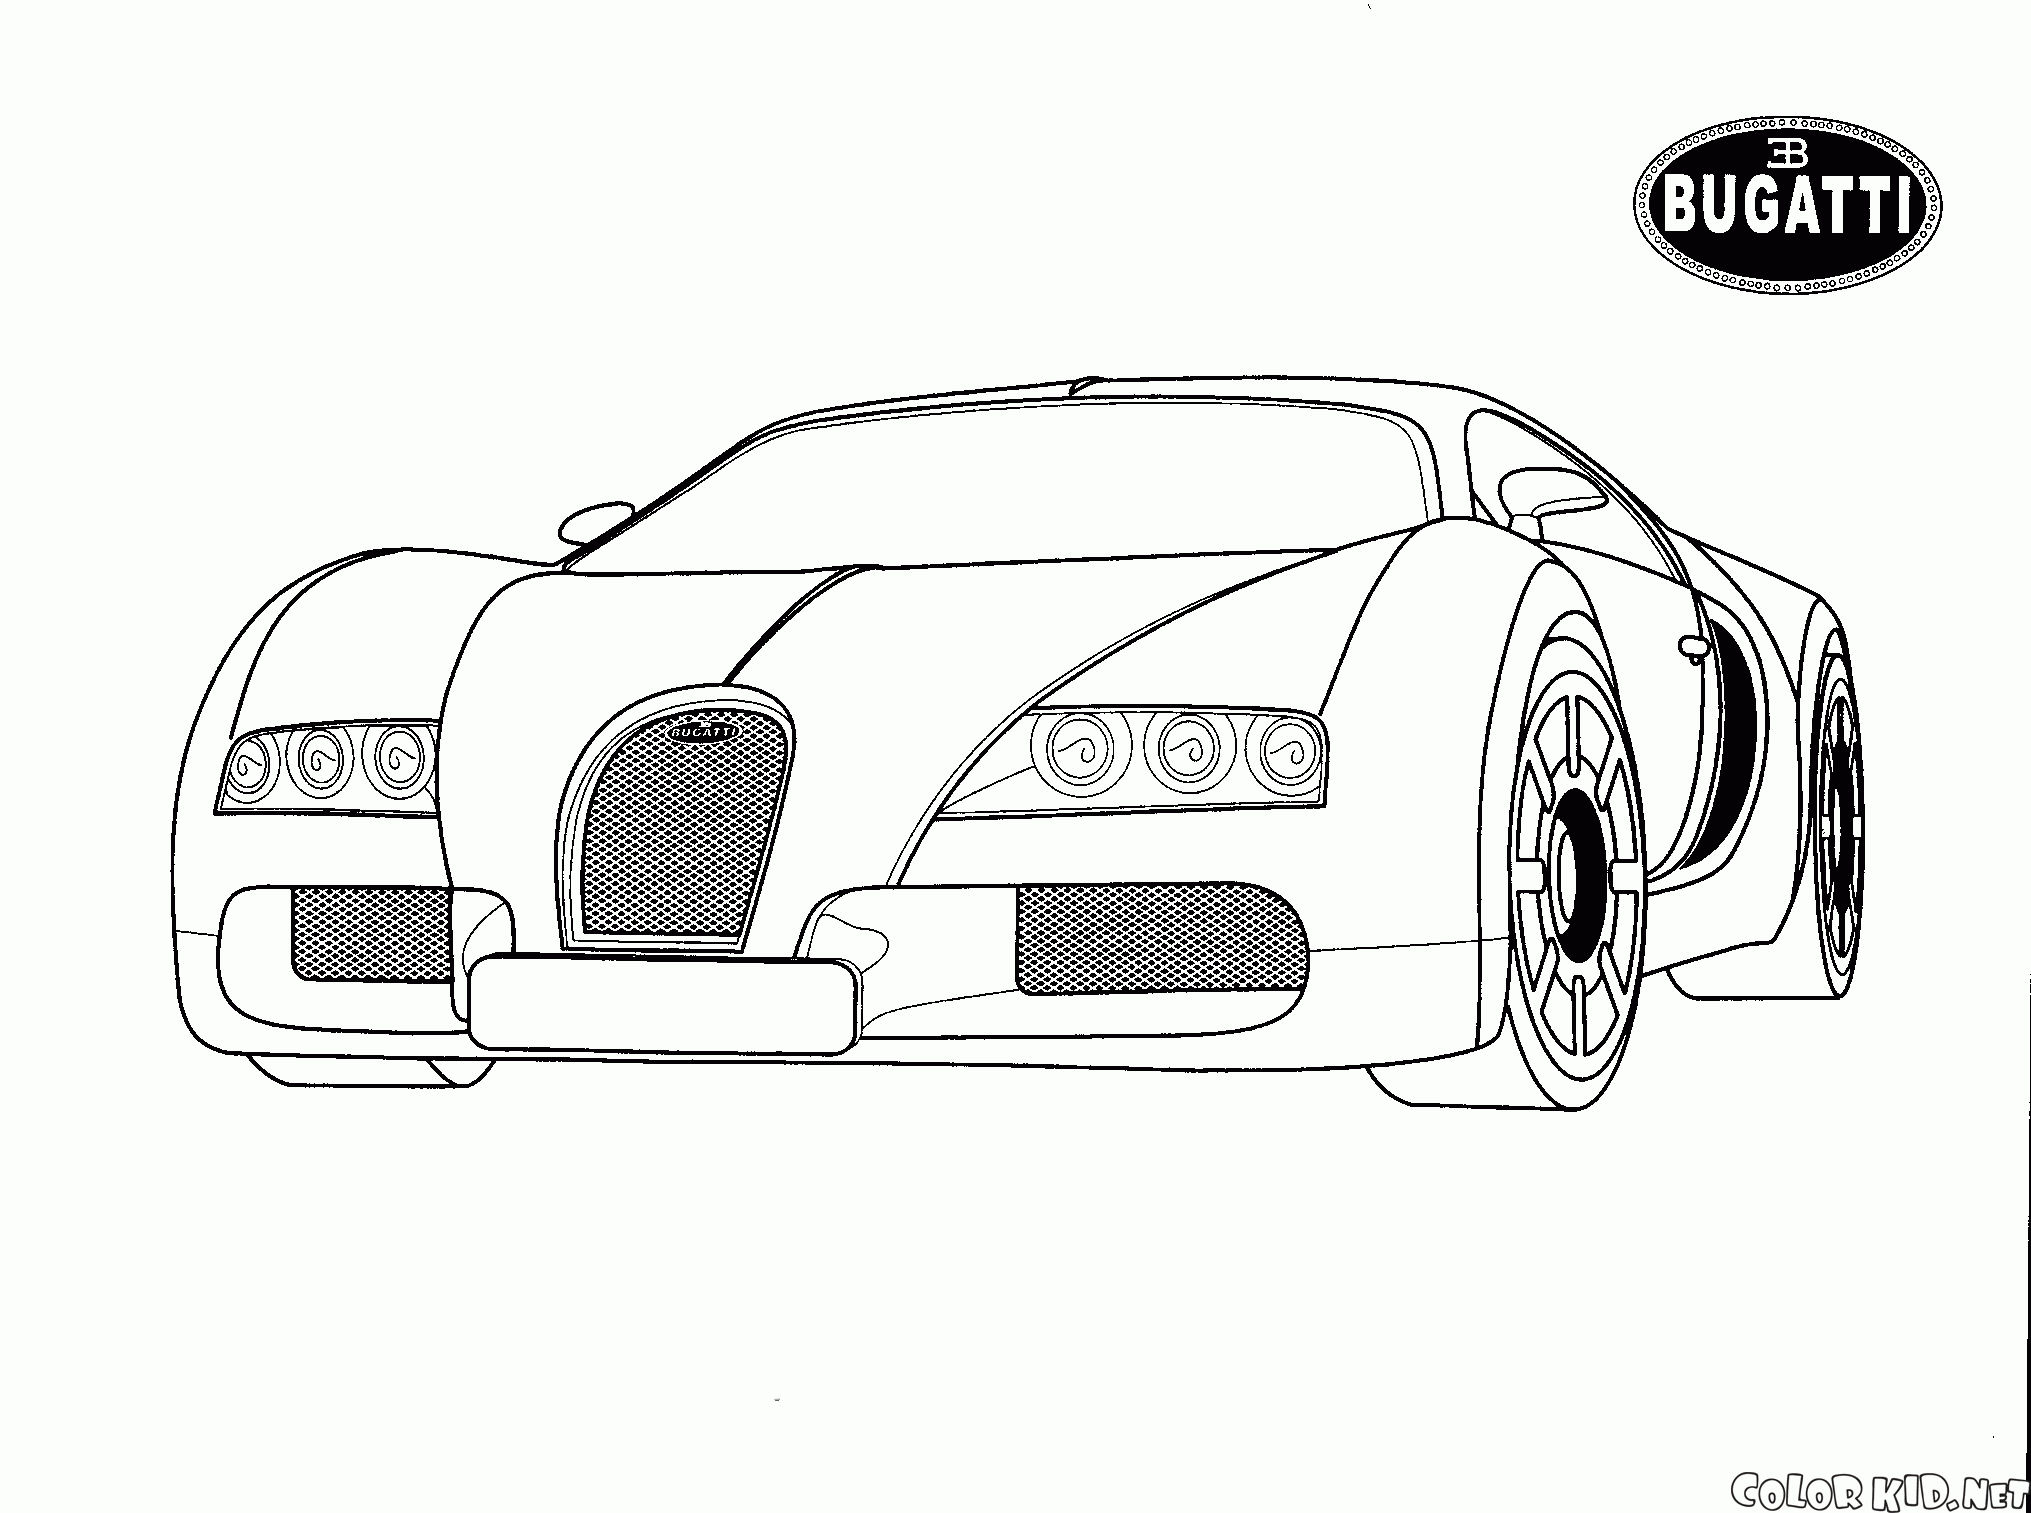 Bugatti (Italie)